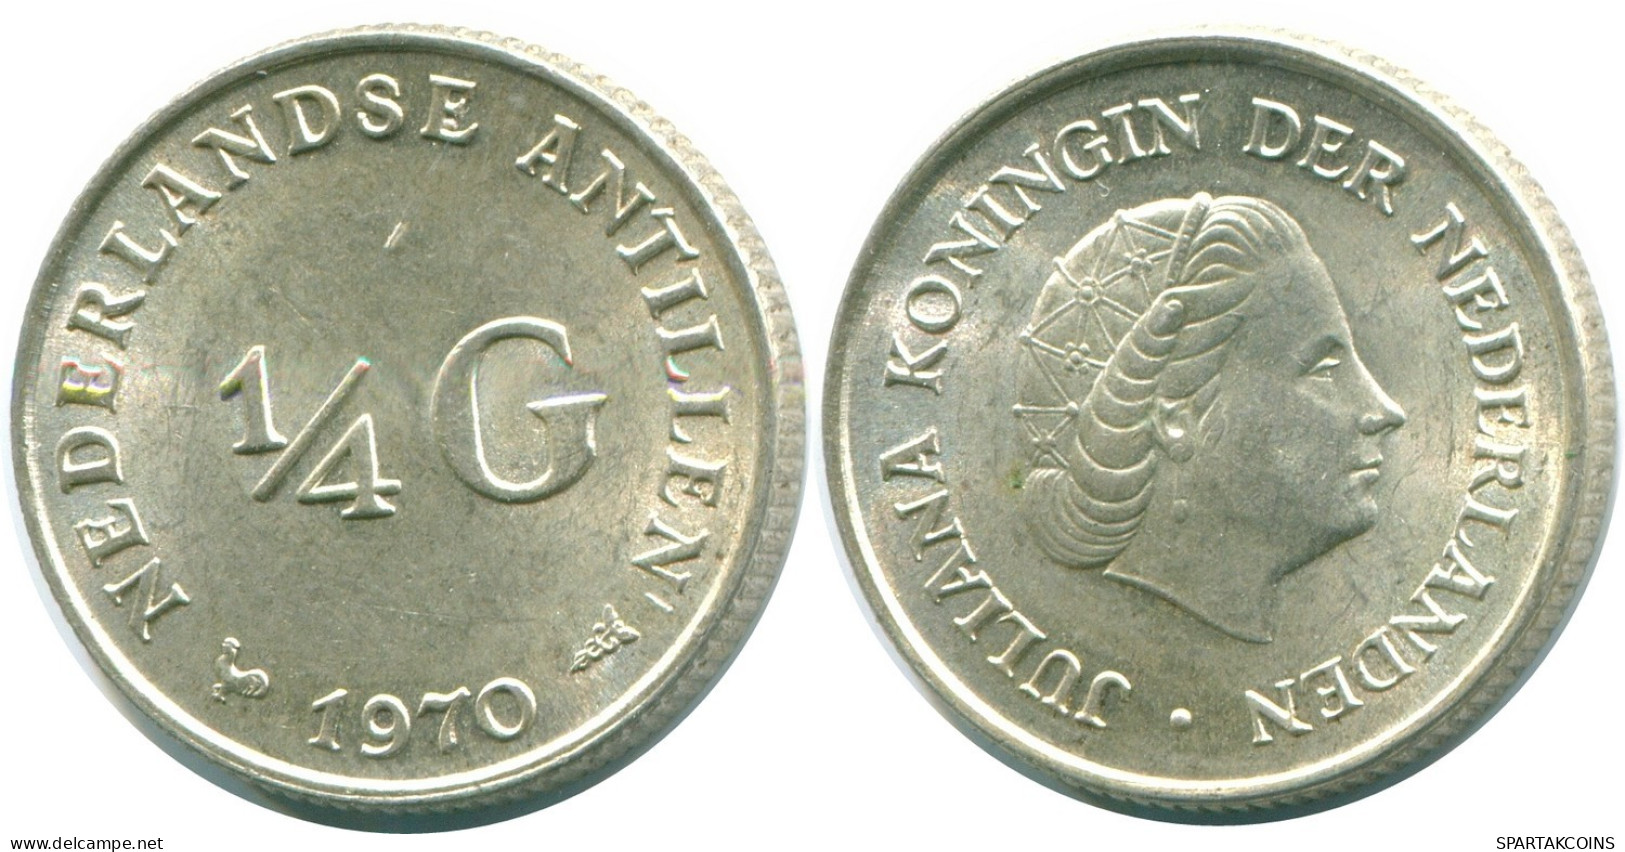 1/4 GULDEN 1970 NETHERLANDS ANTILLES SILVER Colonial Coin #NL11631.4.U.A - Netherlands Antilles